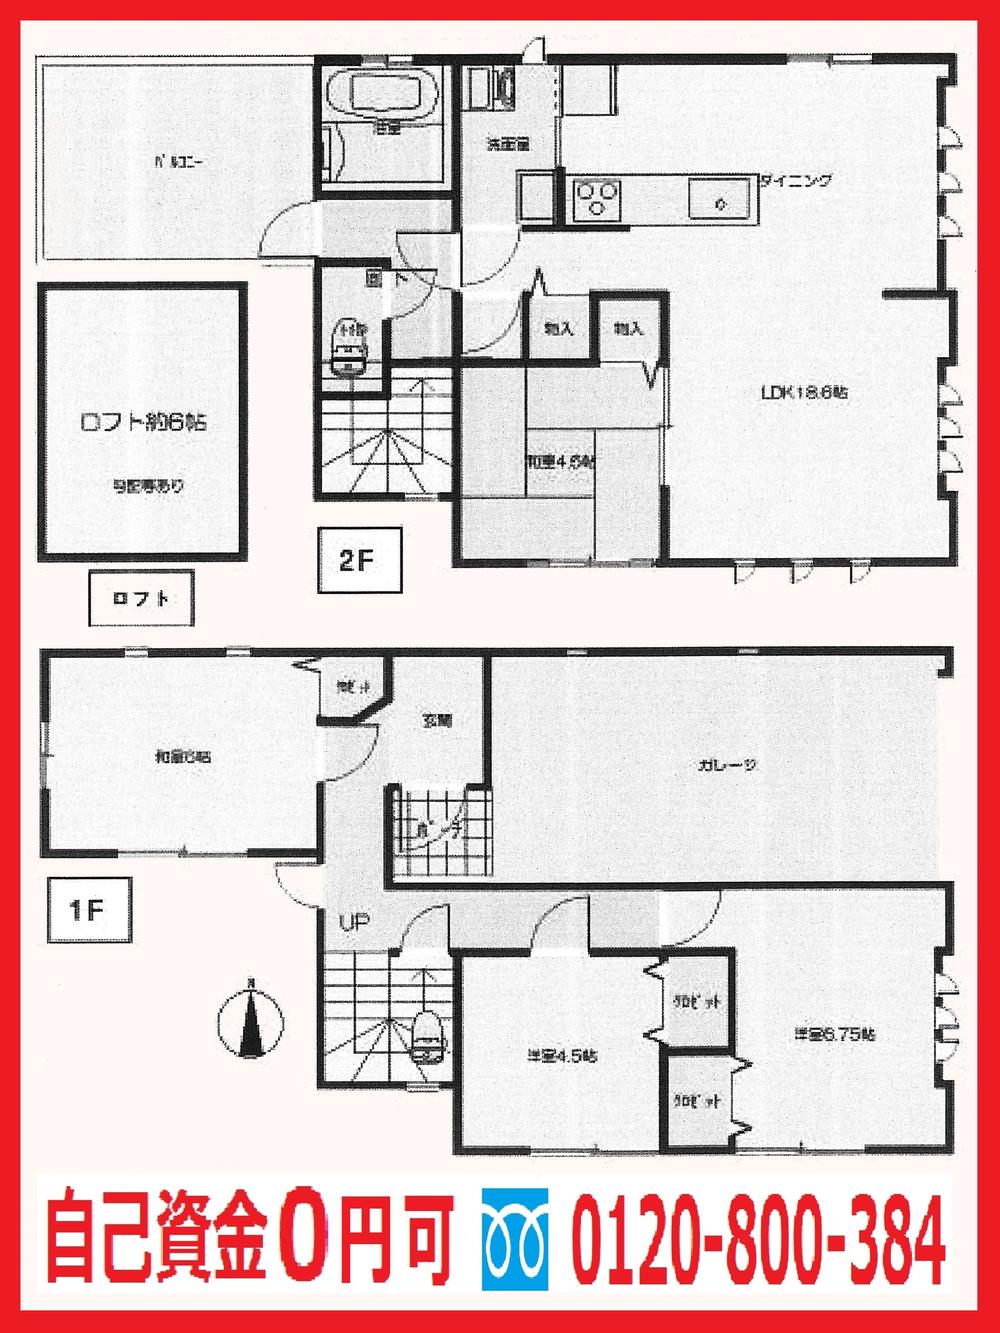 Floor plan. (B Building), Price 41,800,000 yen, 3LDK, Land area 114.05 sq m , Building area 98.61 sq m